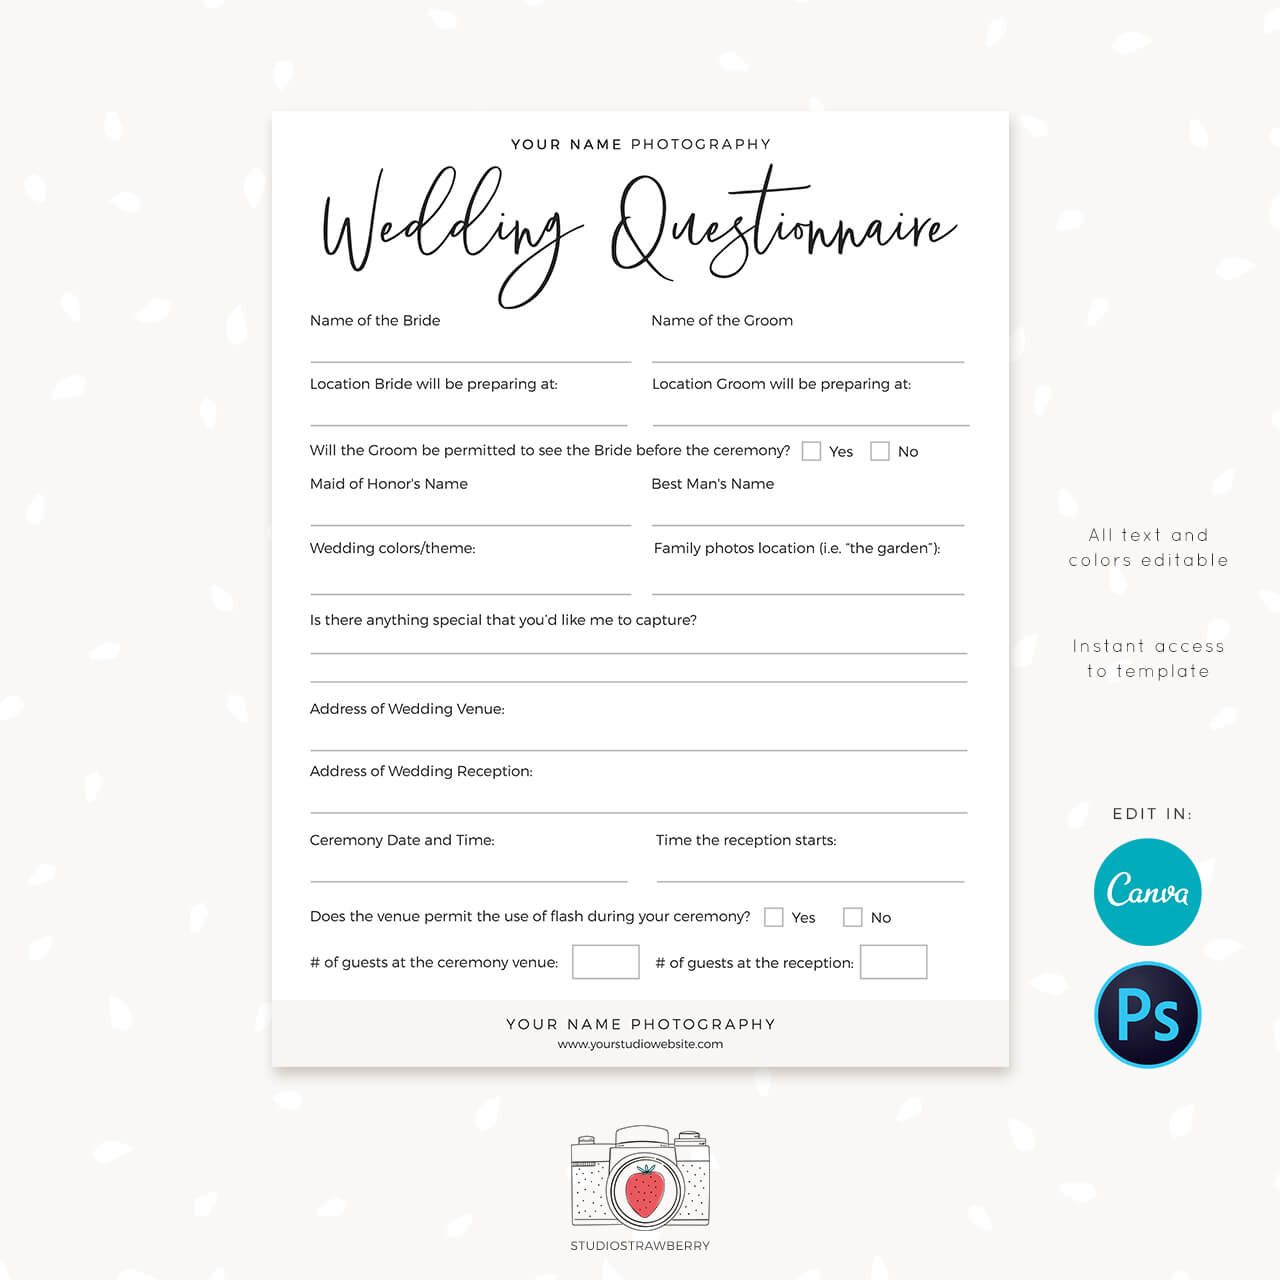 Wedding questionnaire photographer template